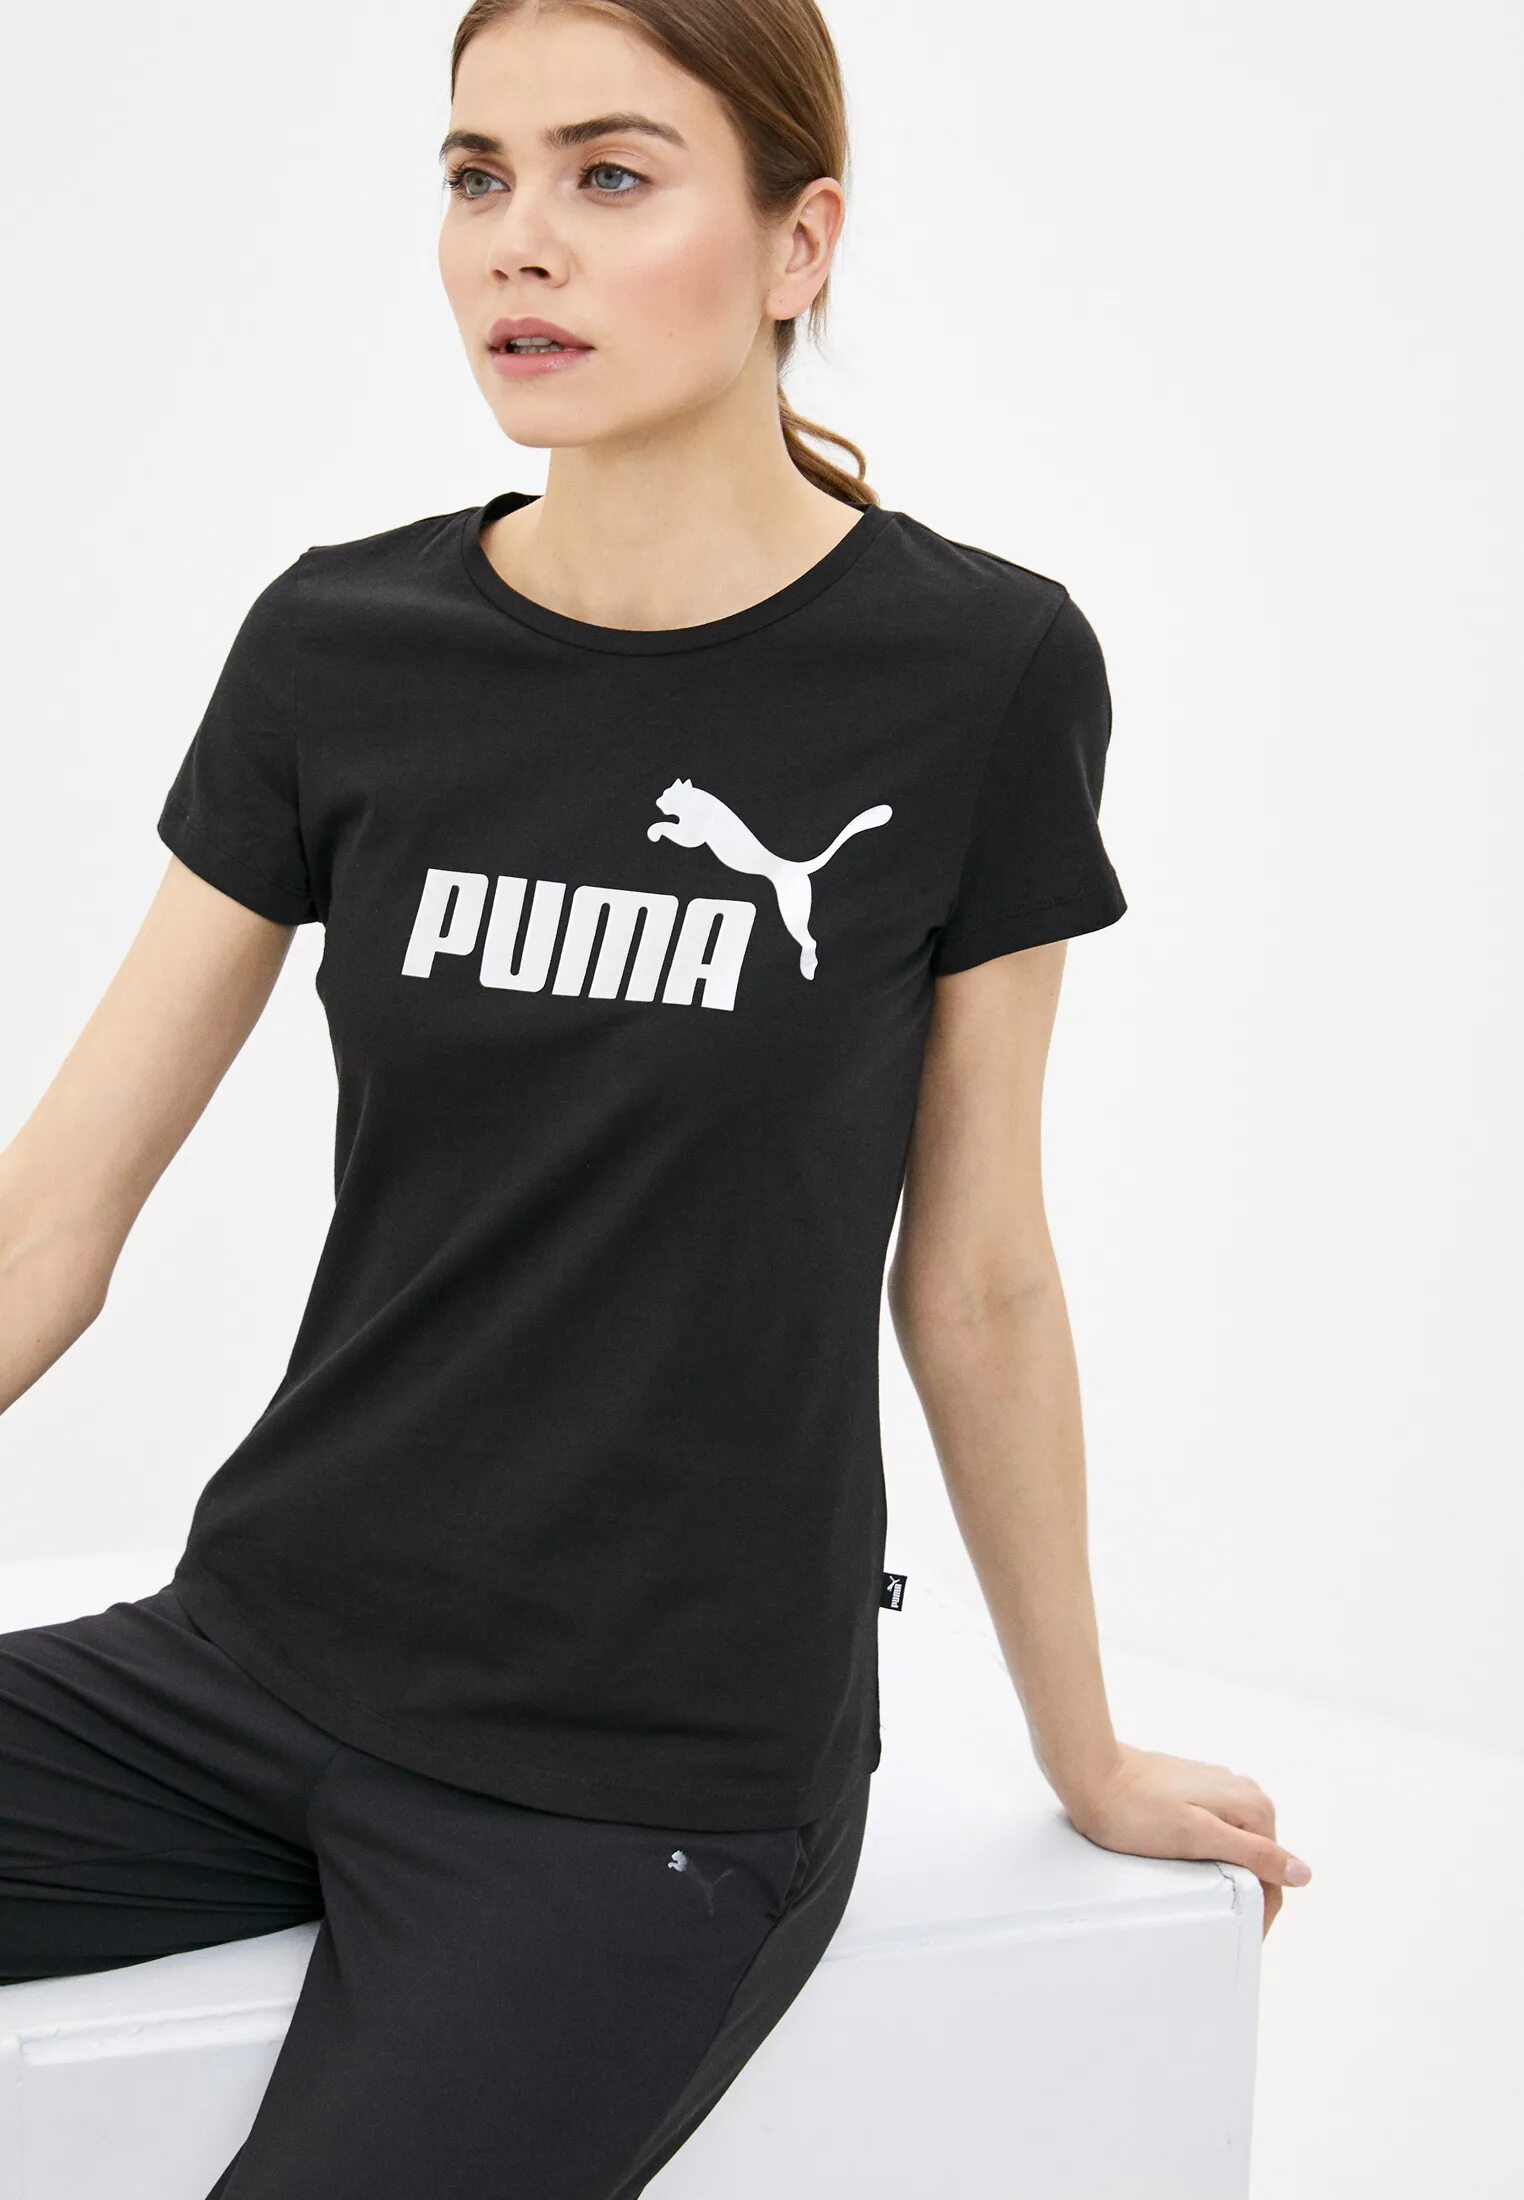 Футболка женская Puma ESS Cropped logo. Пума бренд женские футболки. Футболка Puma женская черная. Чернаяфутболкапунеженская.